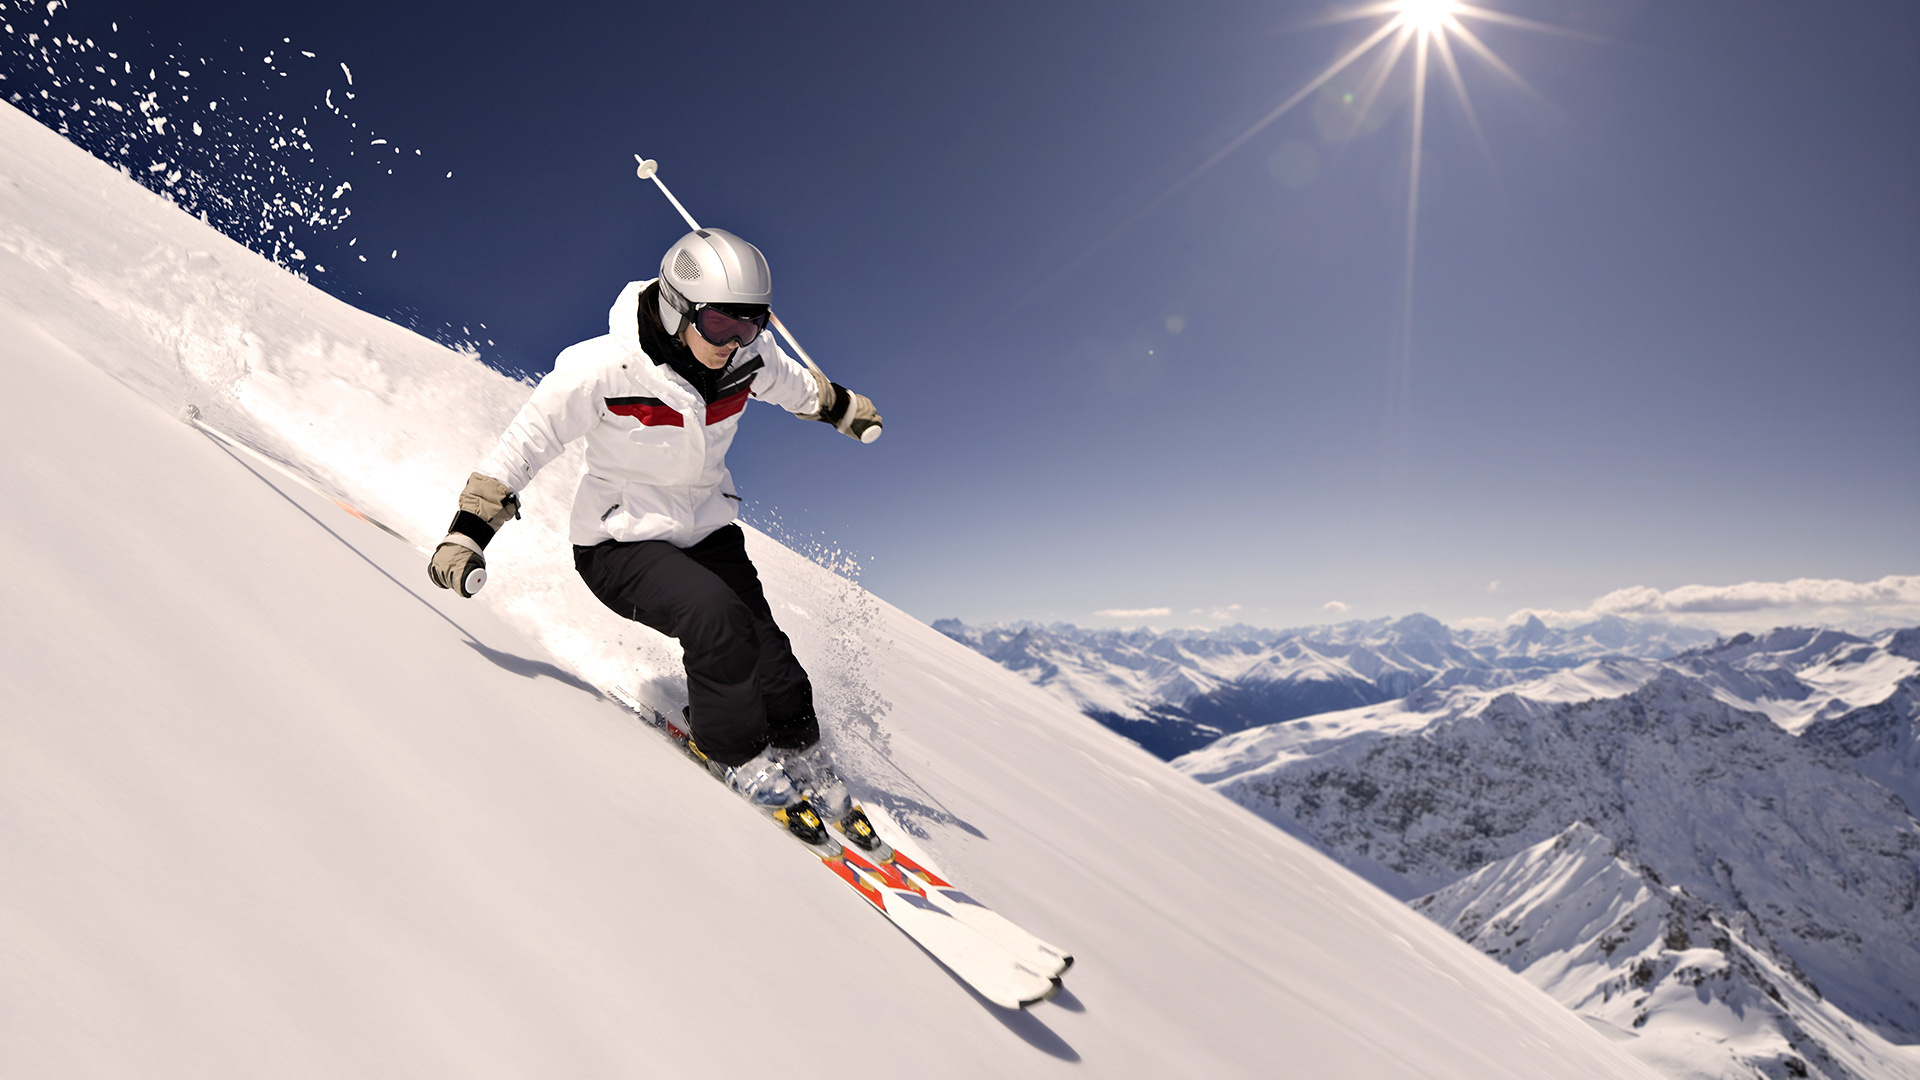 Alpine Skiing: Discipline involving downhill between poles or gates, Cyclic winter sports. 1920x1080 Full HD Background.